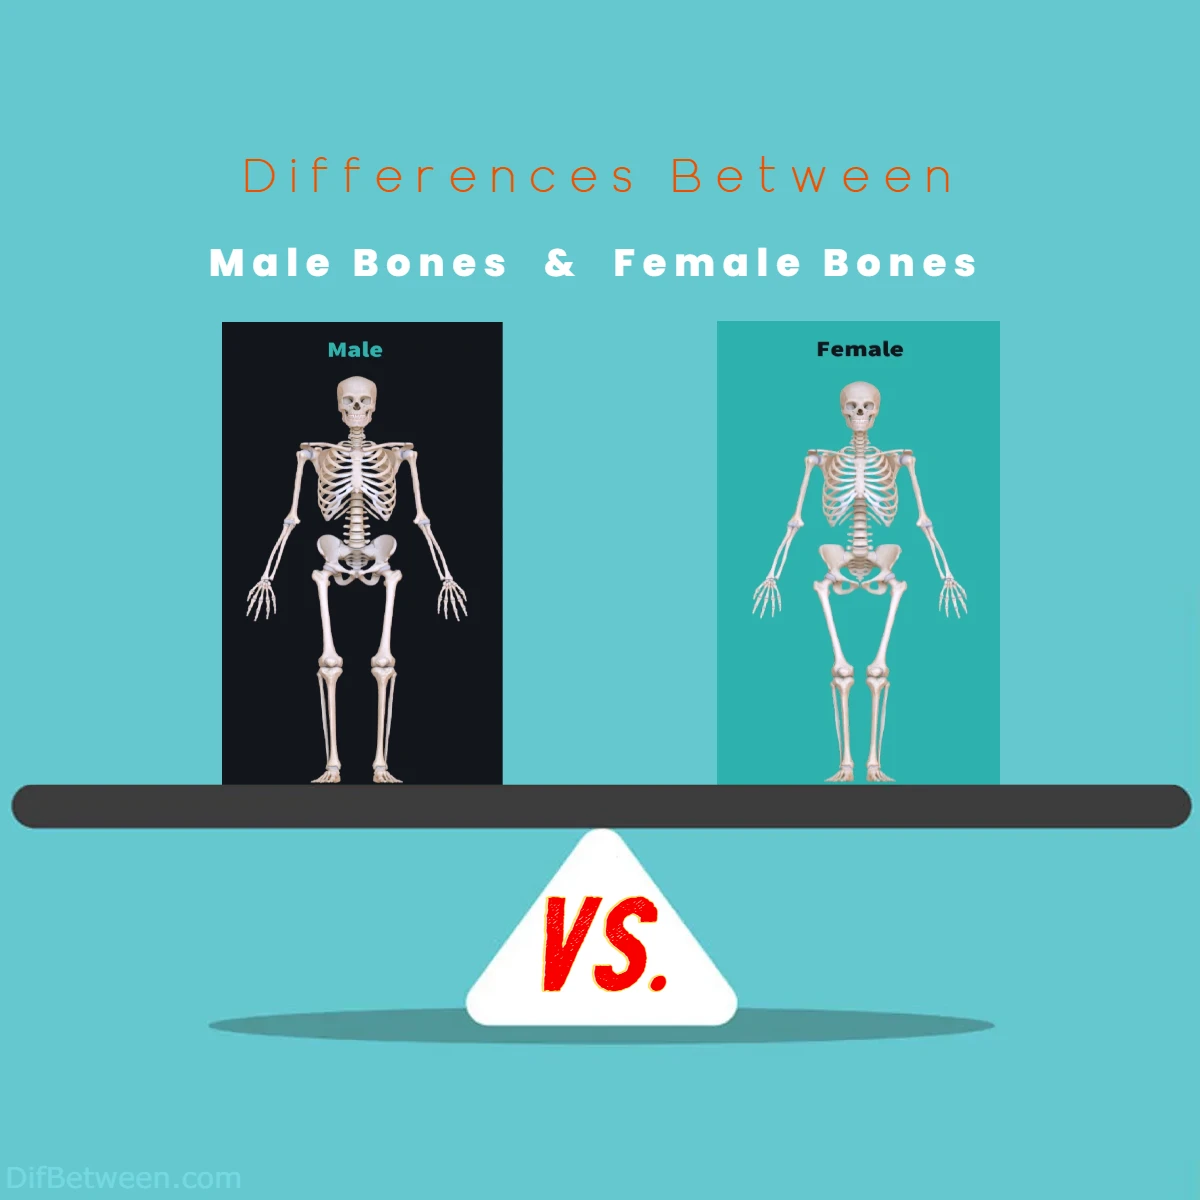 Differences Between Male vs Female Bones